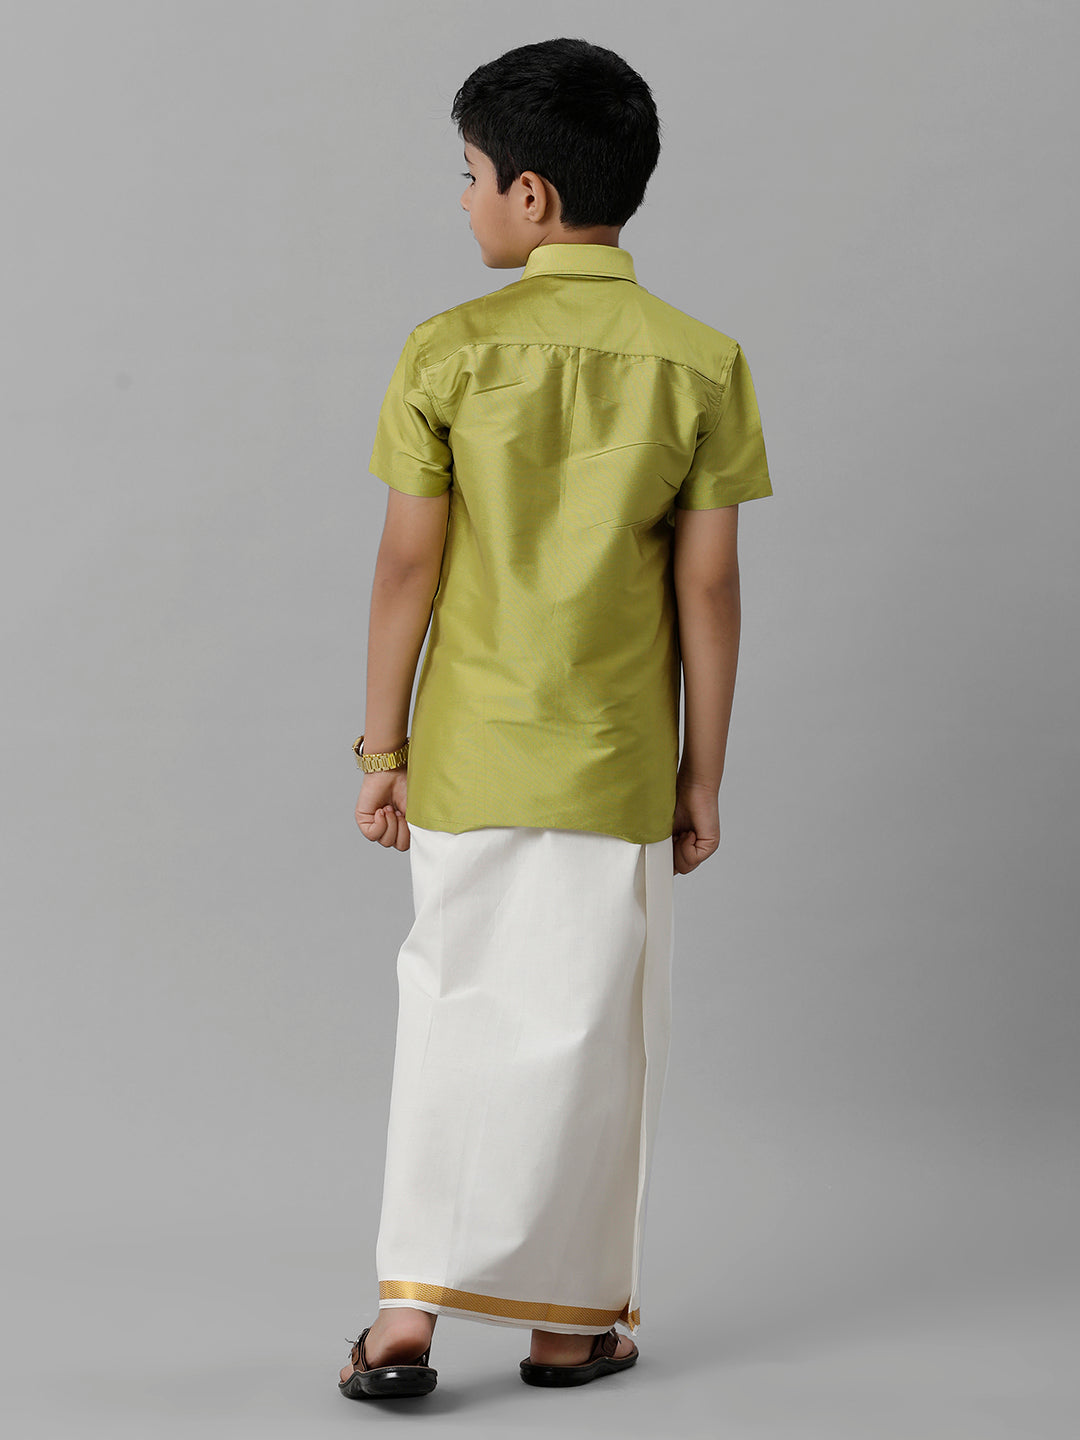 Boys Silk Cotton Lemon Green Half Sleeves Shirt with Adjustable Cream Dhoti Combo K44-Back view